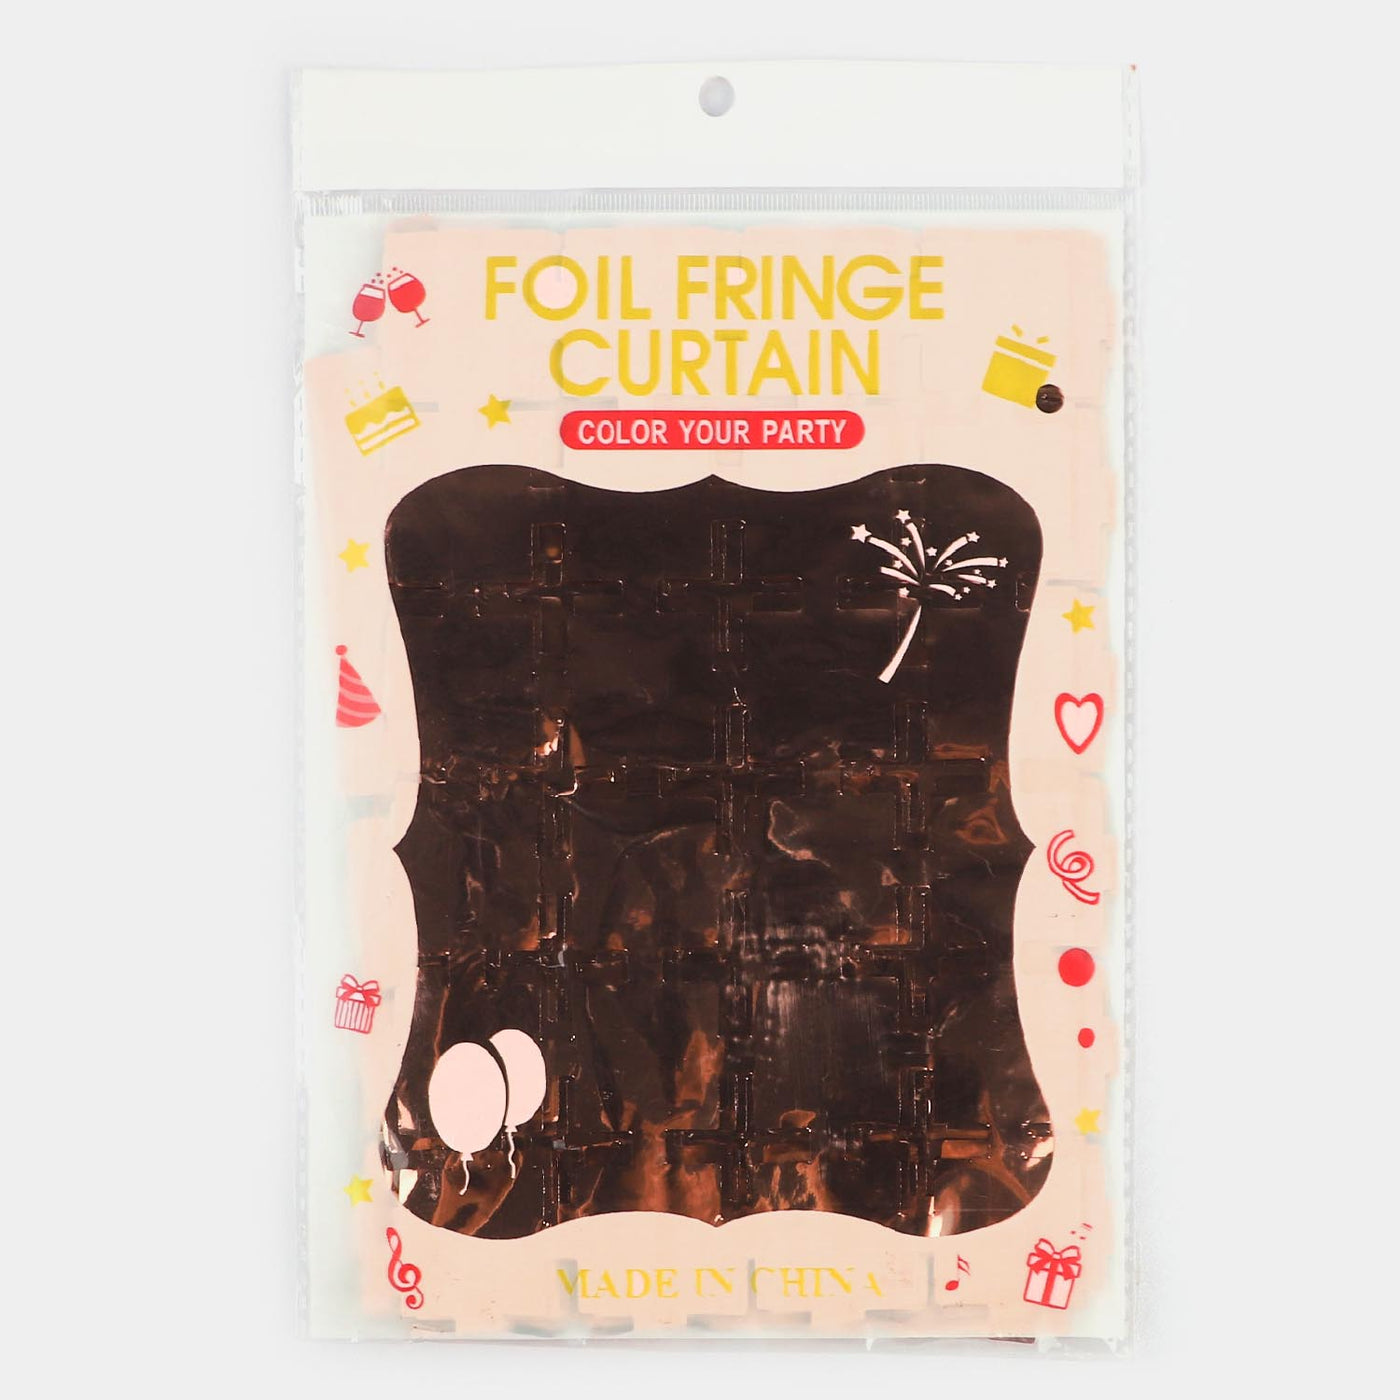 Foil Fringe Curtain Collection, Party Place & Home Decoration